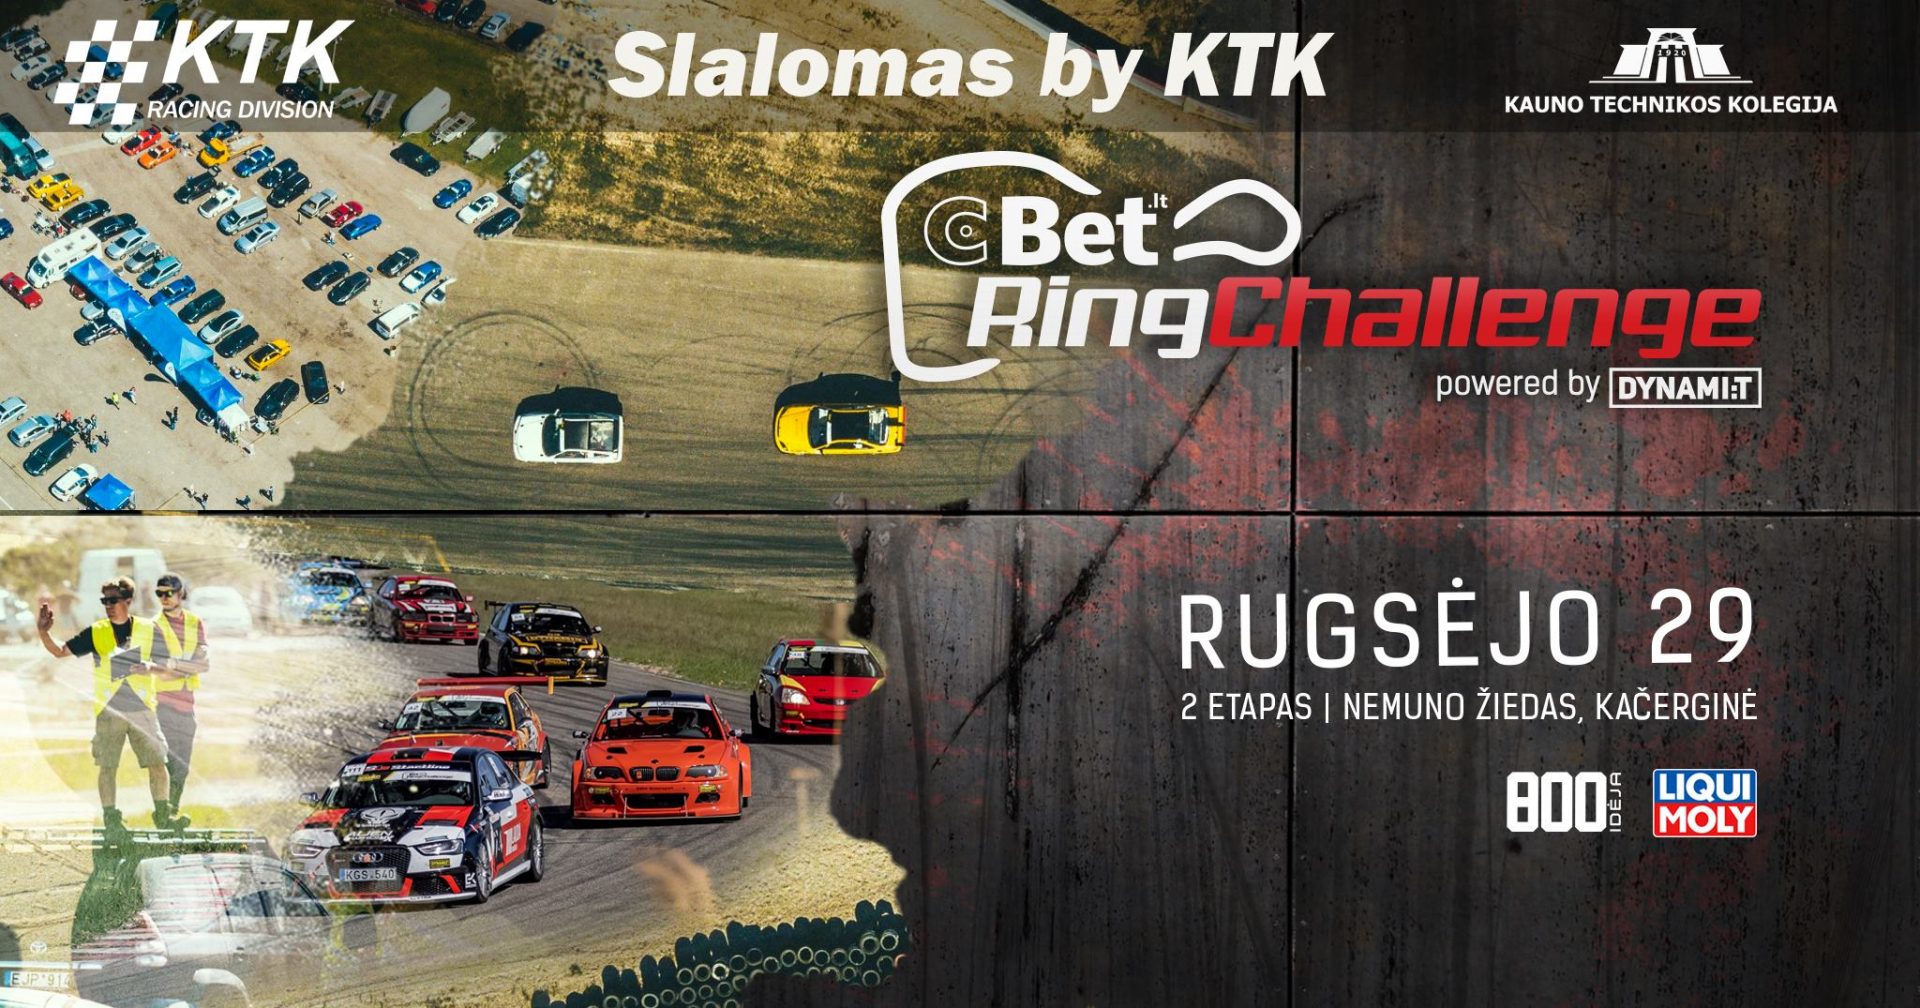 Ring Challenge slalomas by KTK